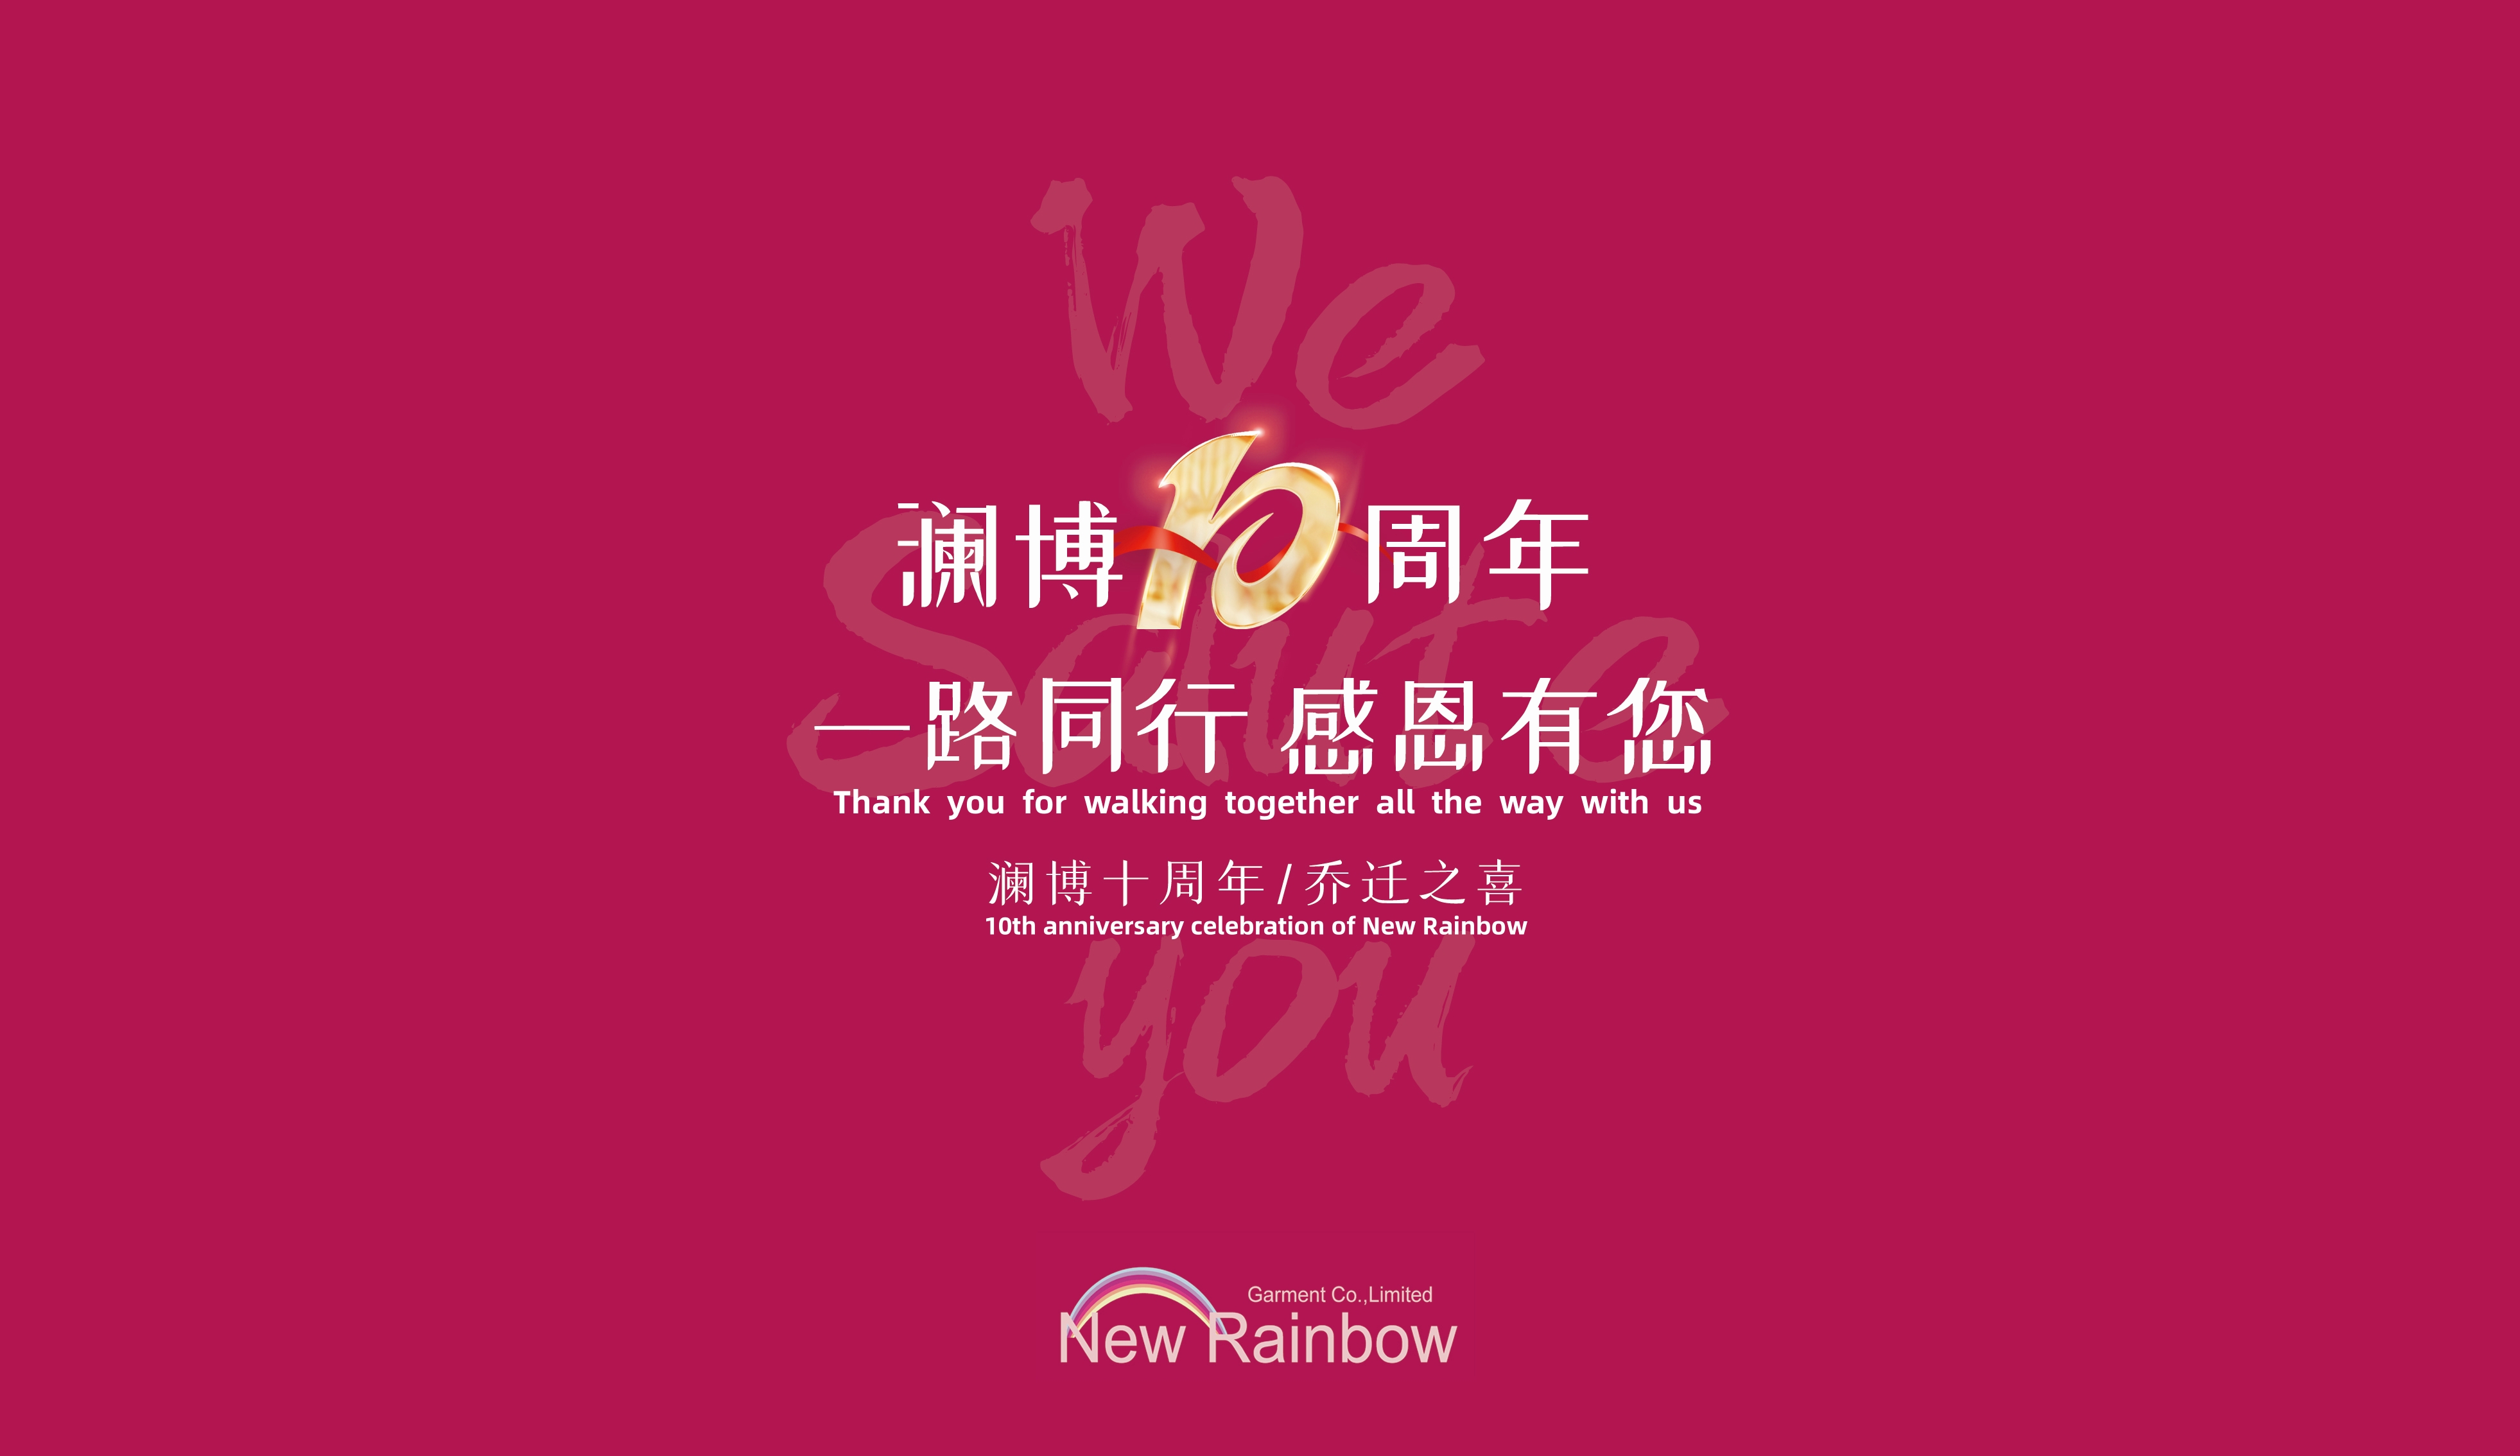 The 10th anniversary celebration of Newrainbow garment Co., Ltd